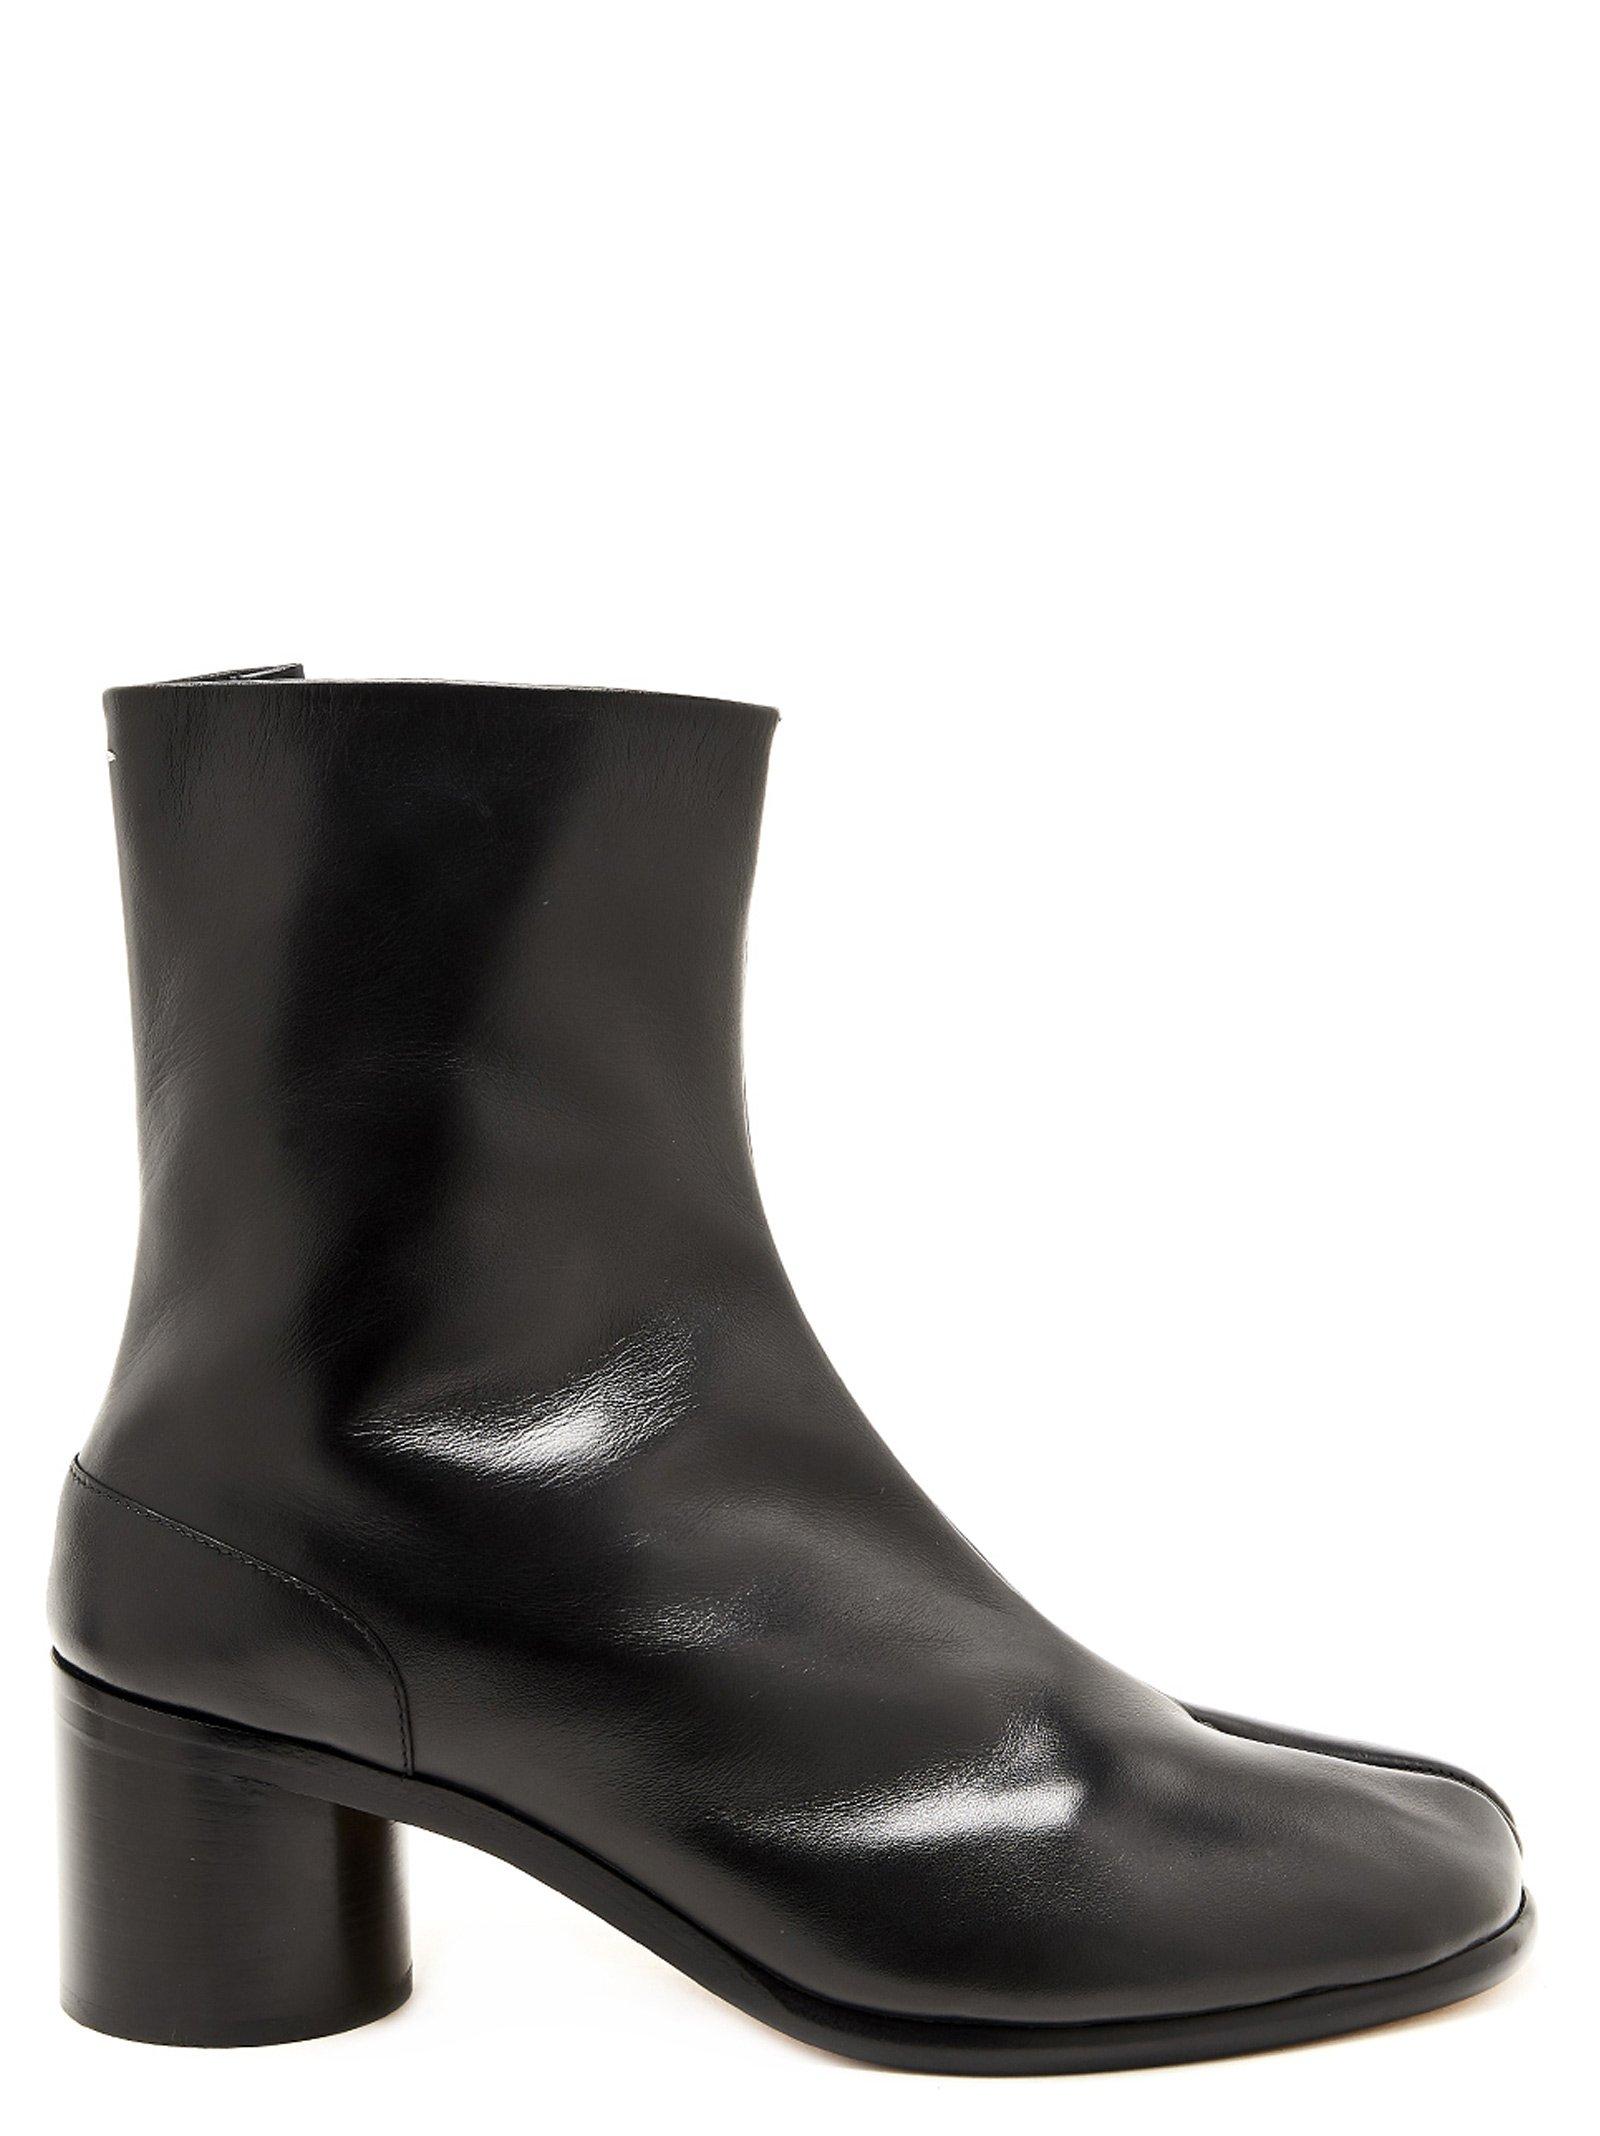 Maison Margiela Tabi Split Toe Leather Ankle Boots in Black for Men - Lyst